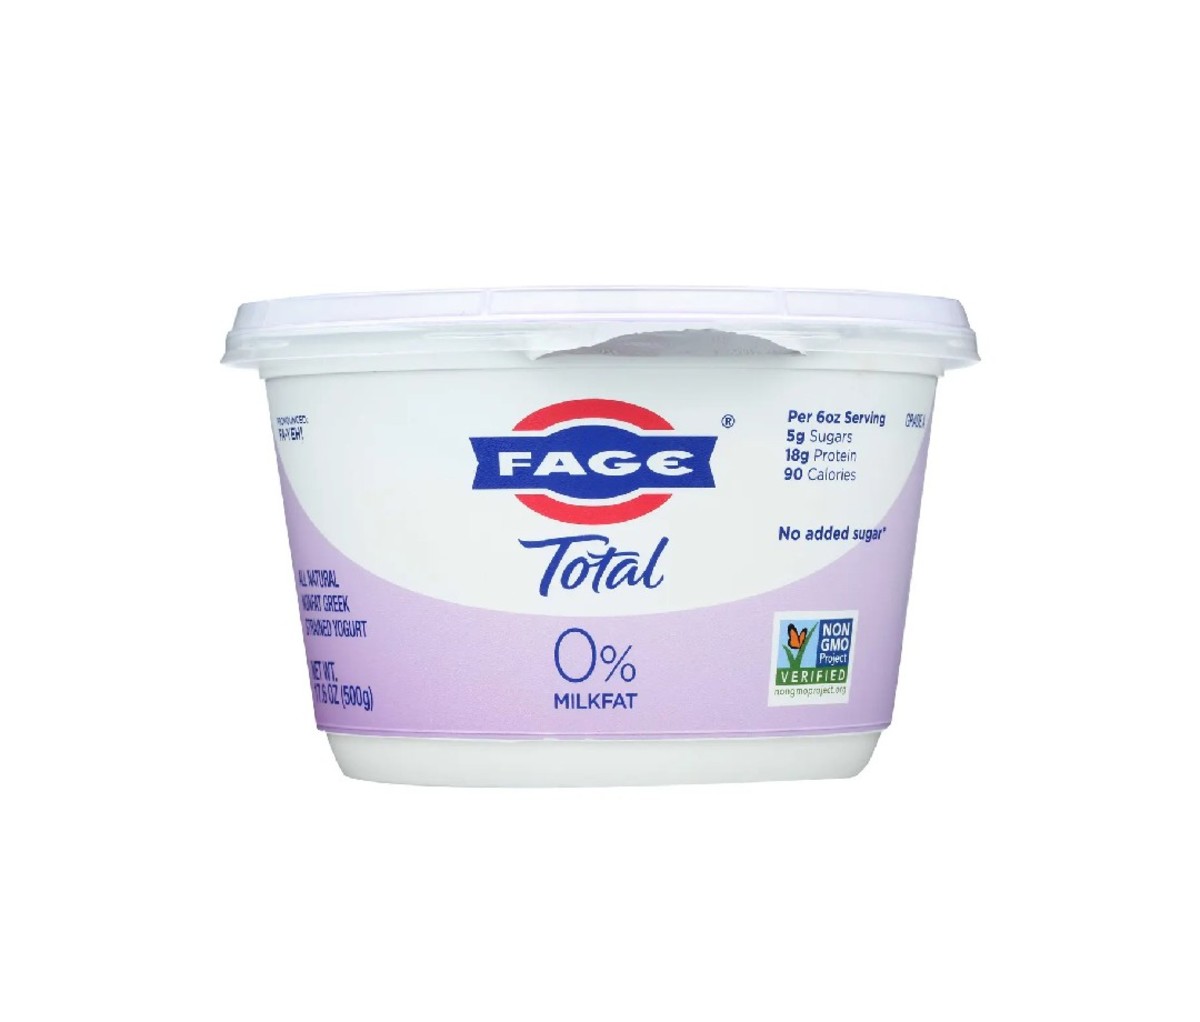 Fage Total Greek Yogurt